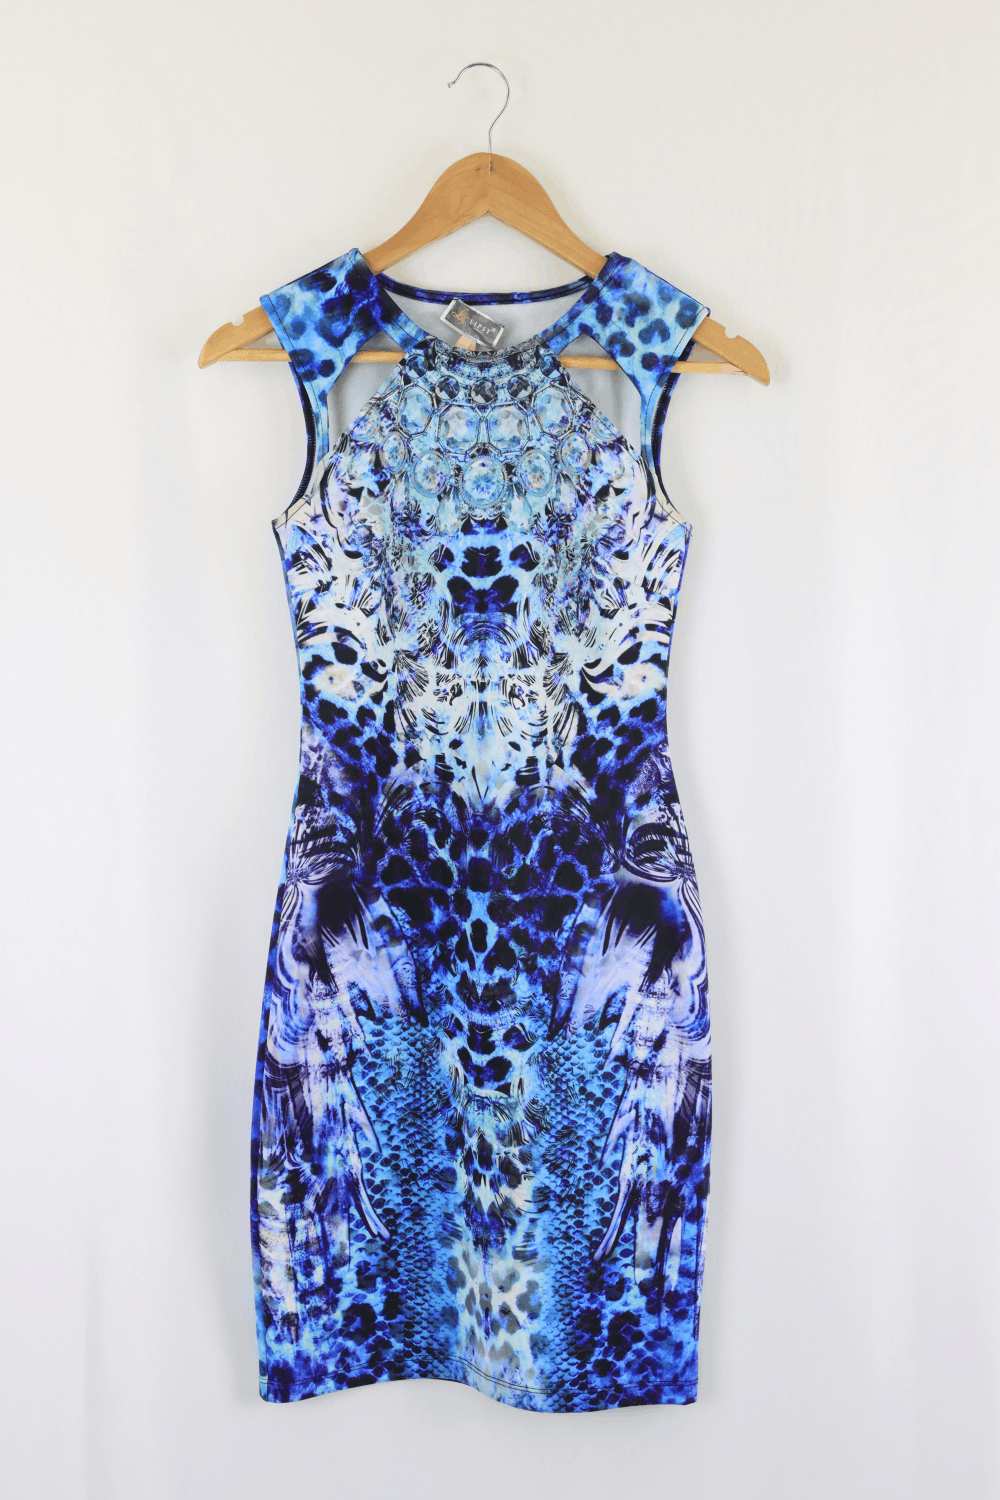 Lipsy London Blue Floral Short Dress 8 - Reluv Clothing Australia